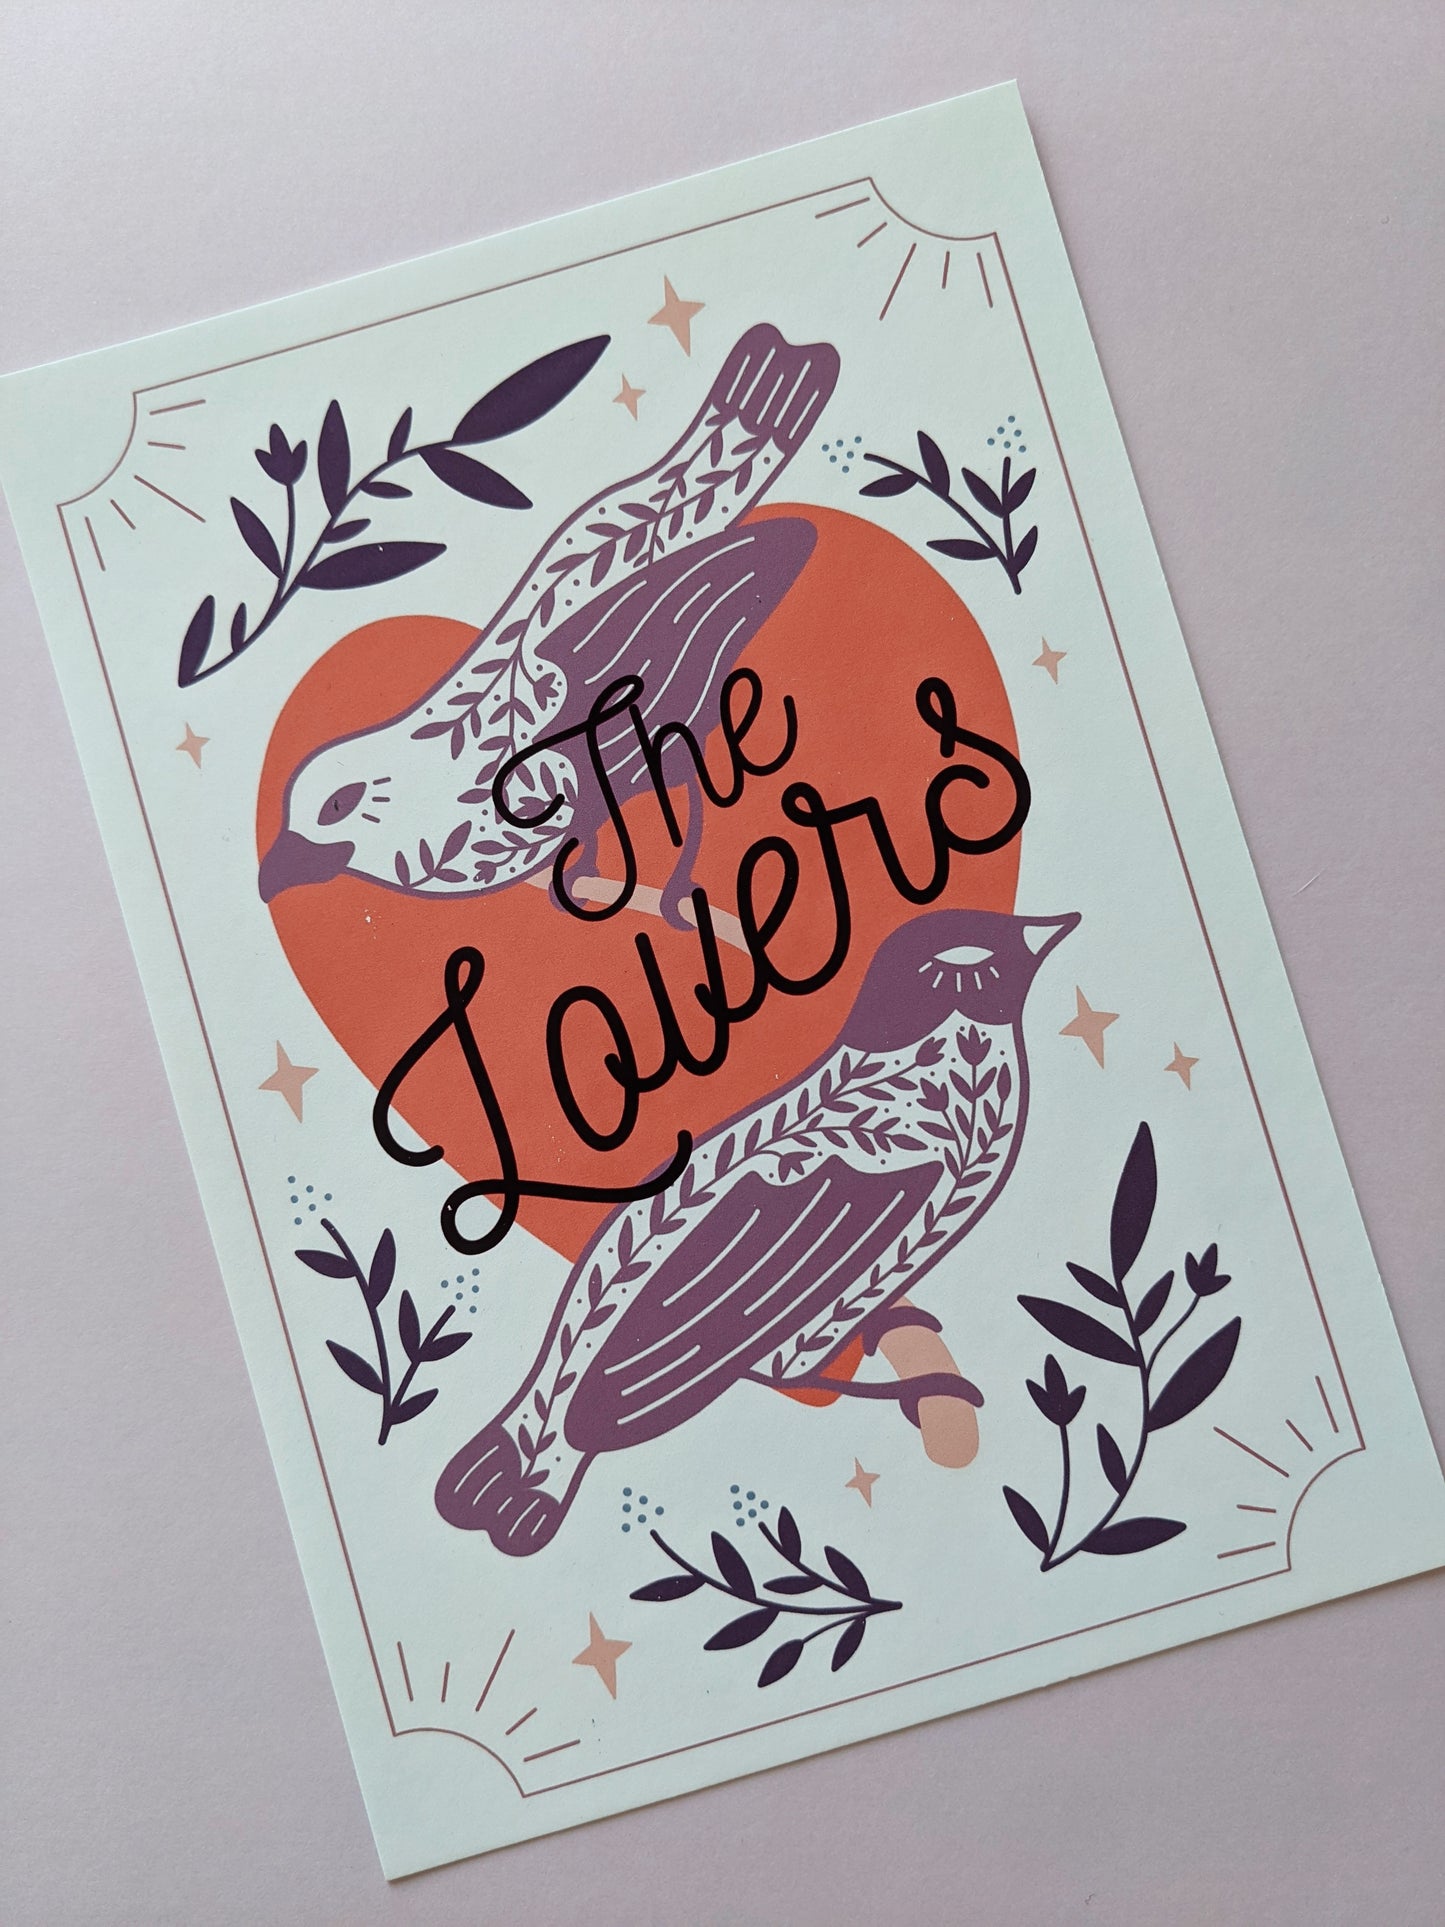 The Lovers Tarot Card Art Print